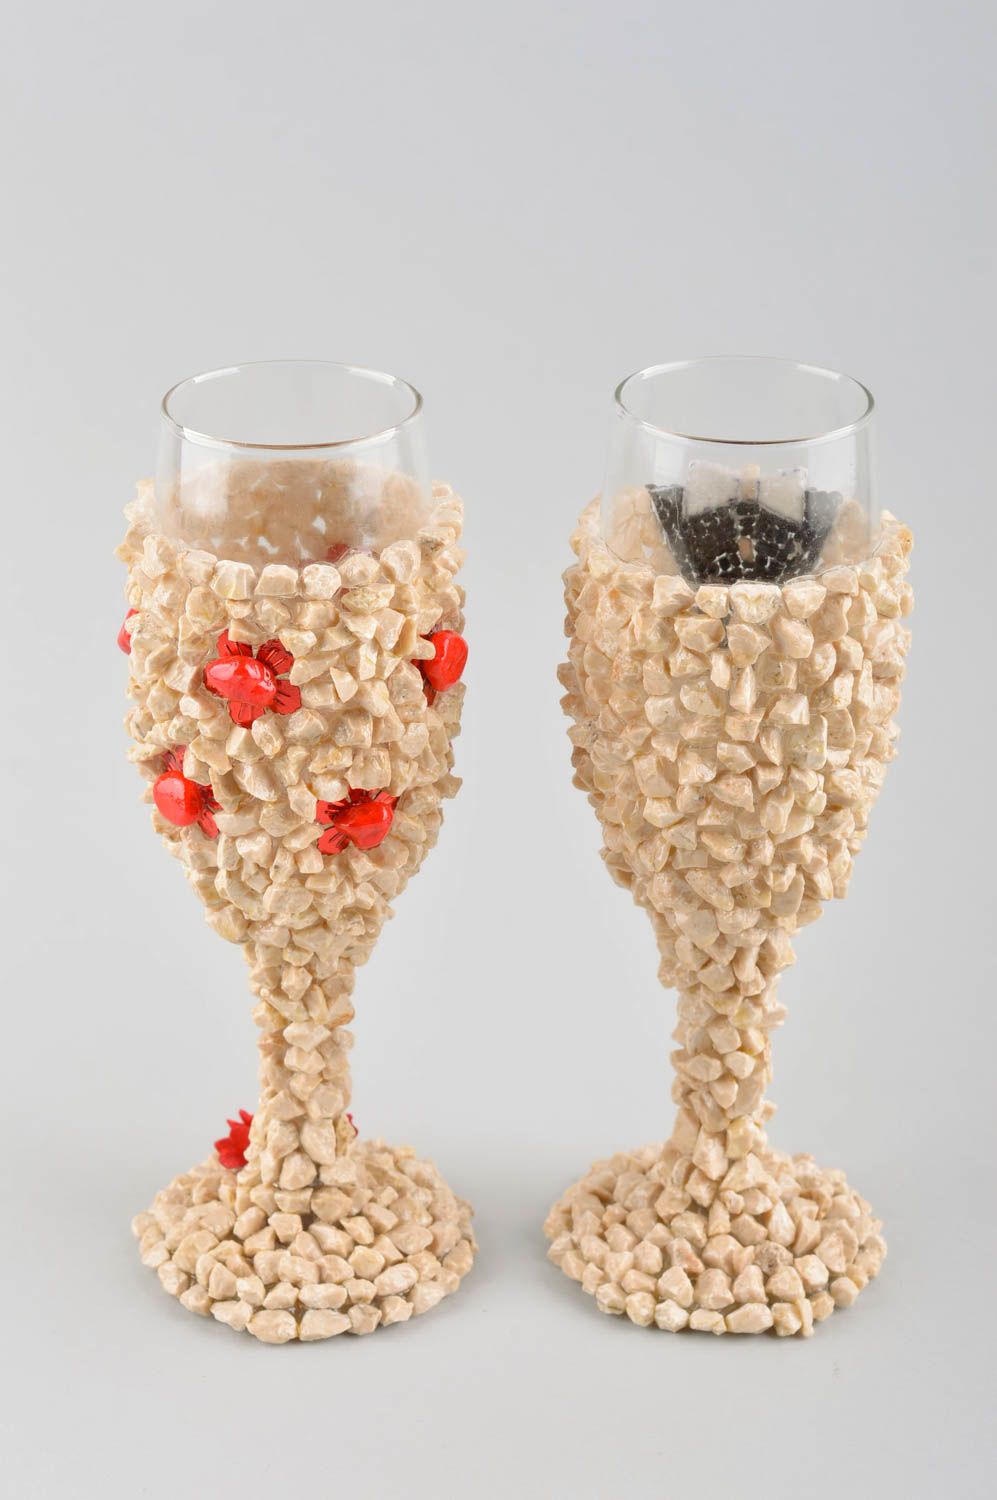 Stylish handmade champagne glasses 2 wedding glasses stemware ideas wedding gift photo 3